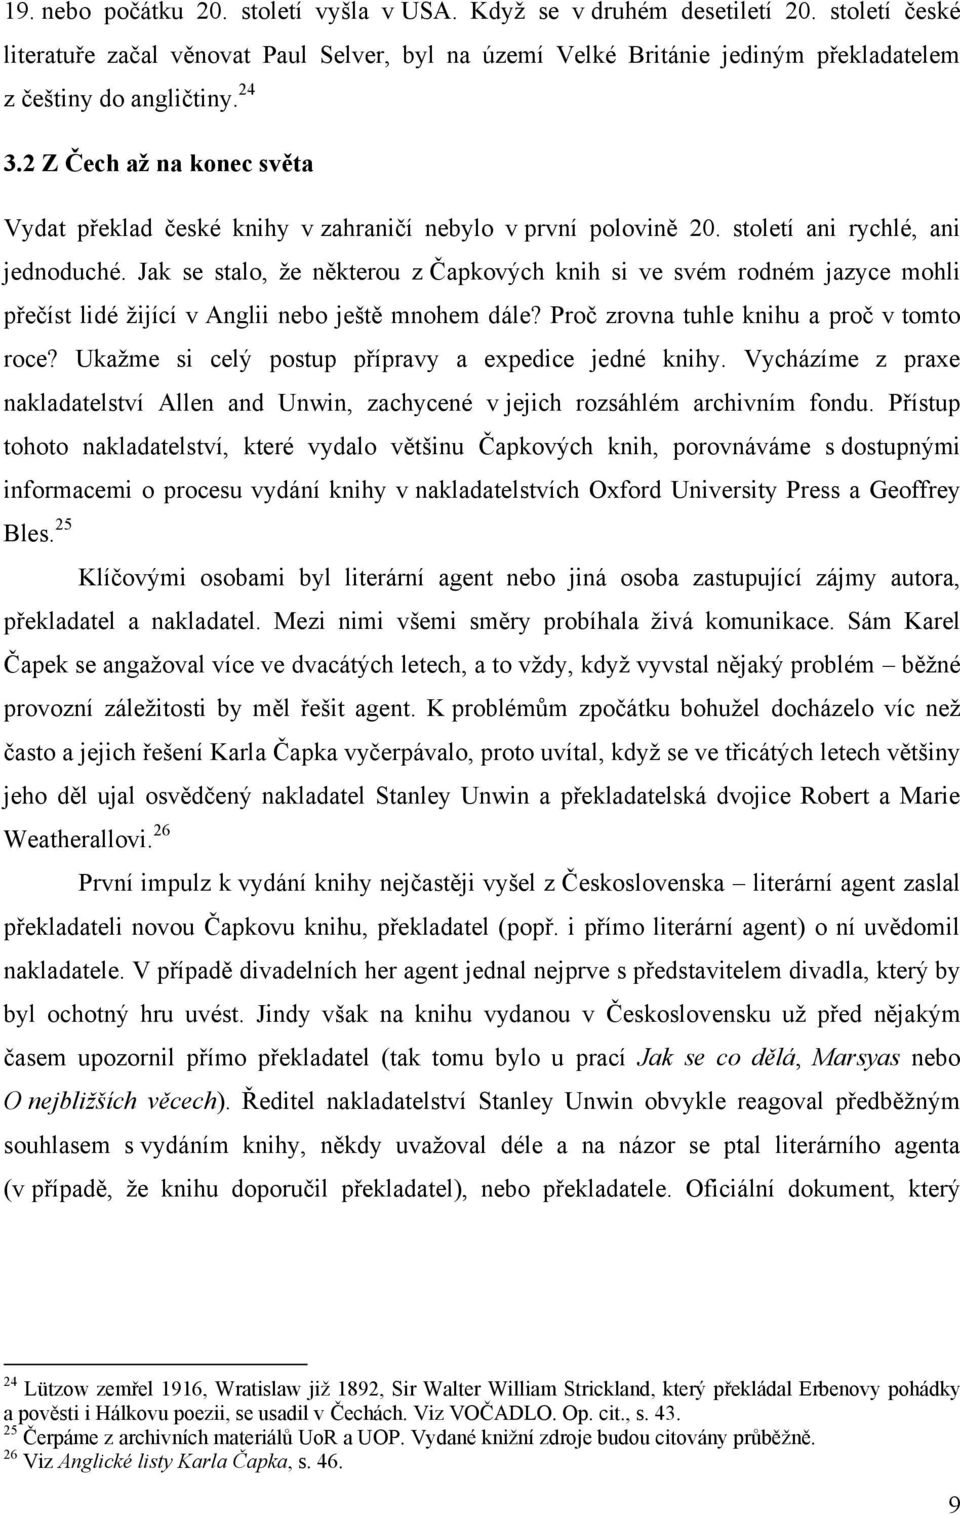 MASARYKOVA UNIVERZITA - PDF Free Download